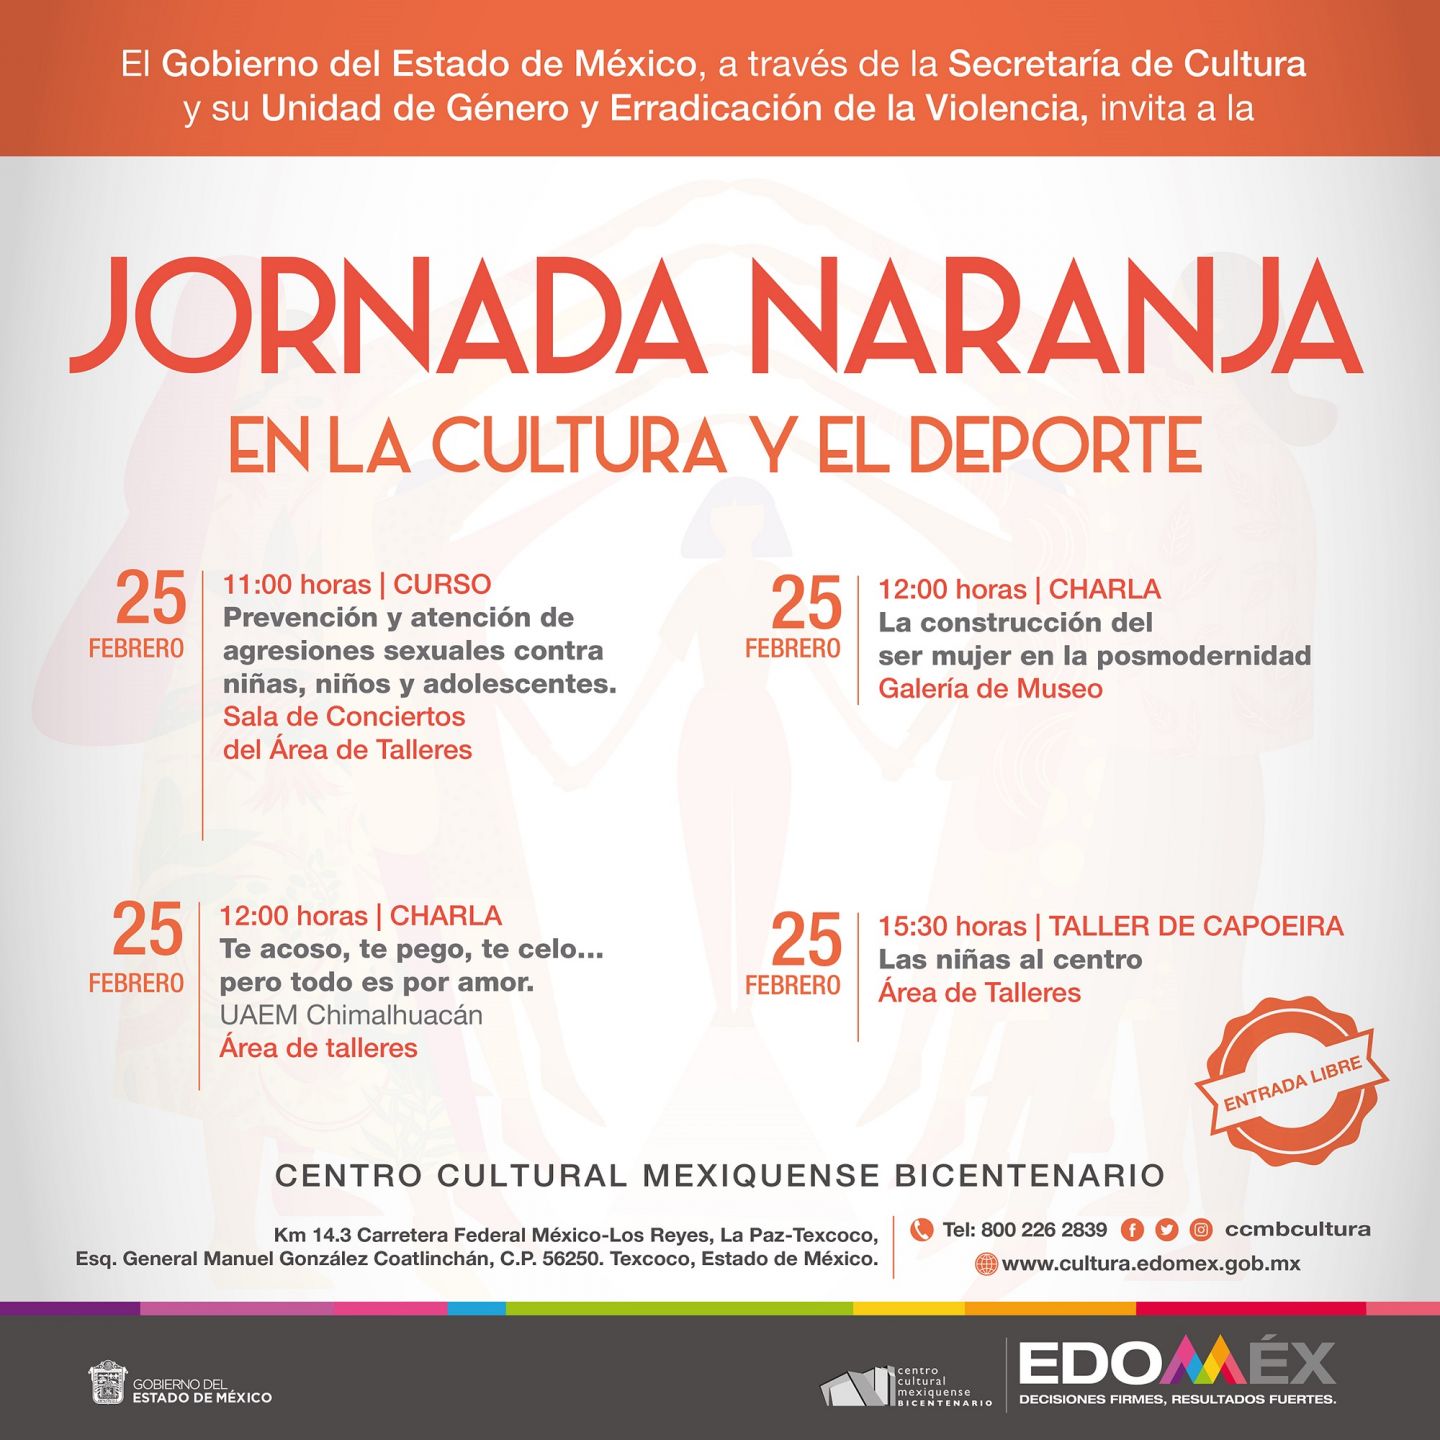 Organizan jornada naranja en el centro cultural mexiquense bicentenario 